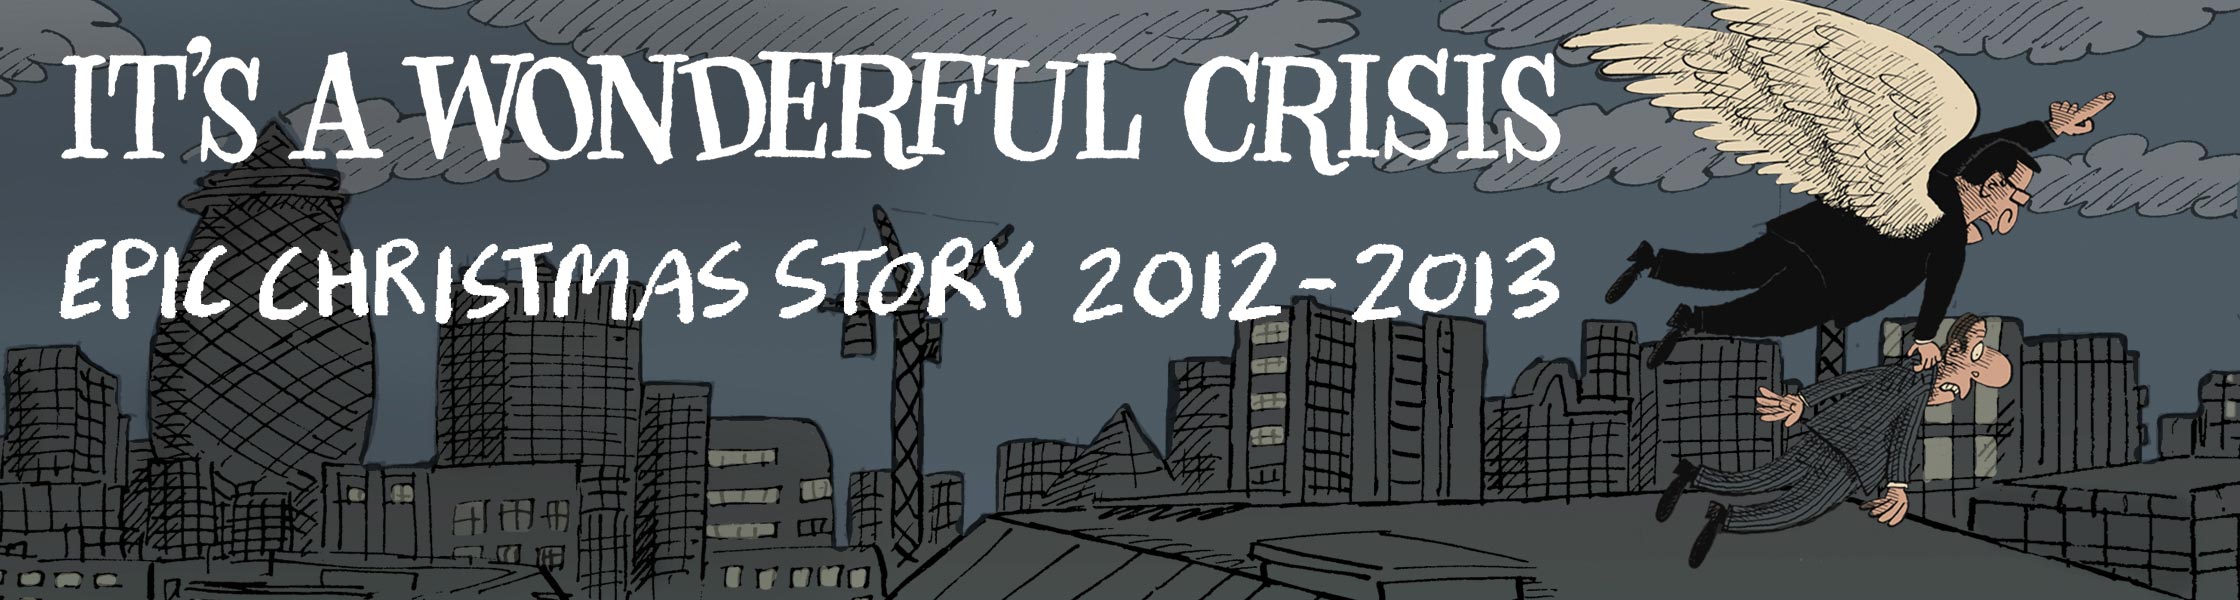 A wonderful crisis